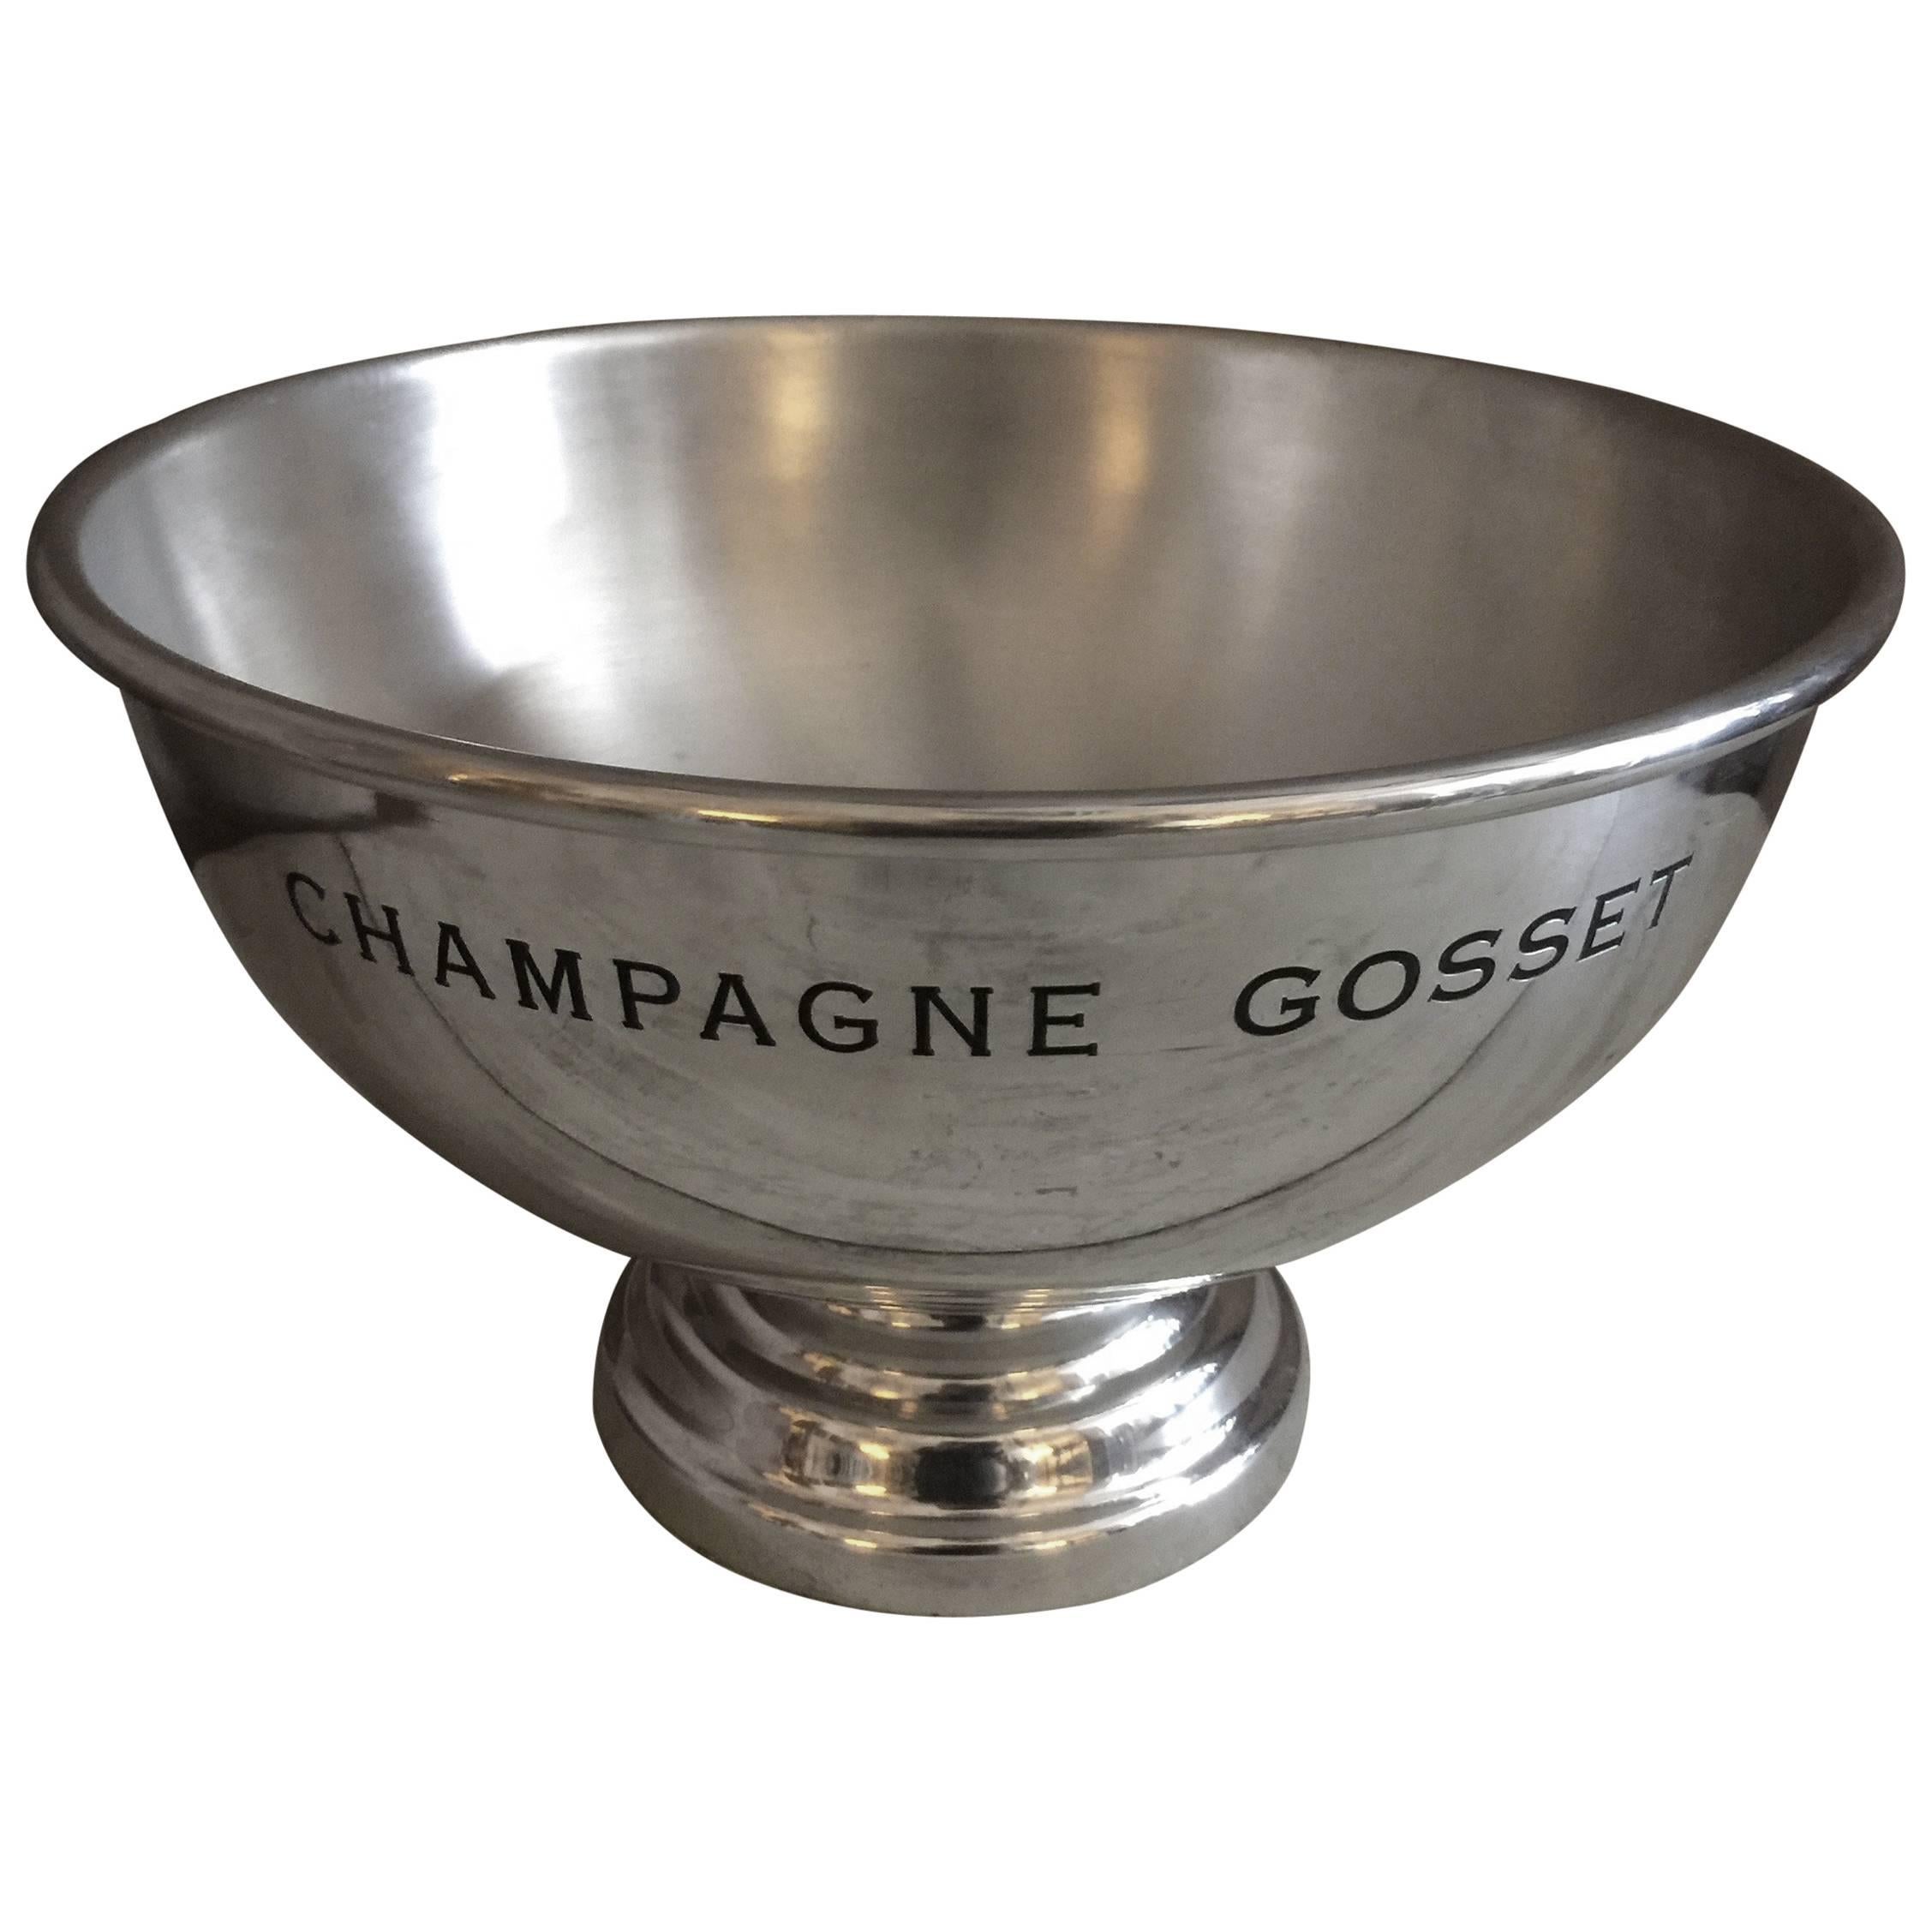 Vintage French Champagne Cooler